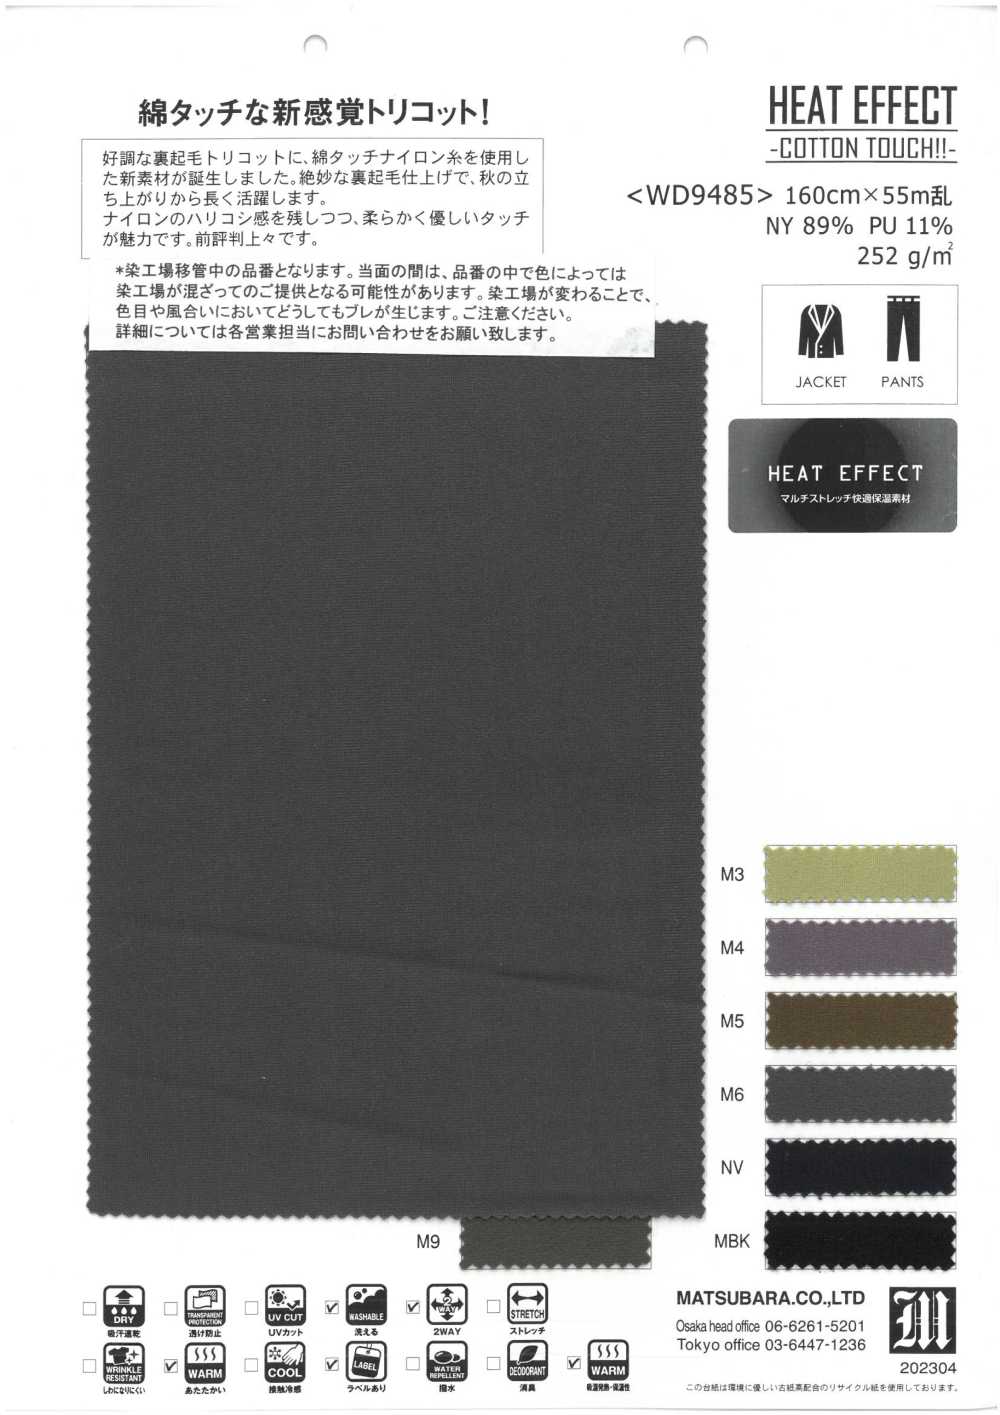 WD9485 HEAT EFFECT -COTTON TOUCH!!-[Textile / Fabric] Matsubara